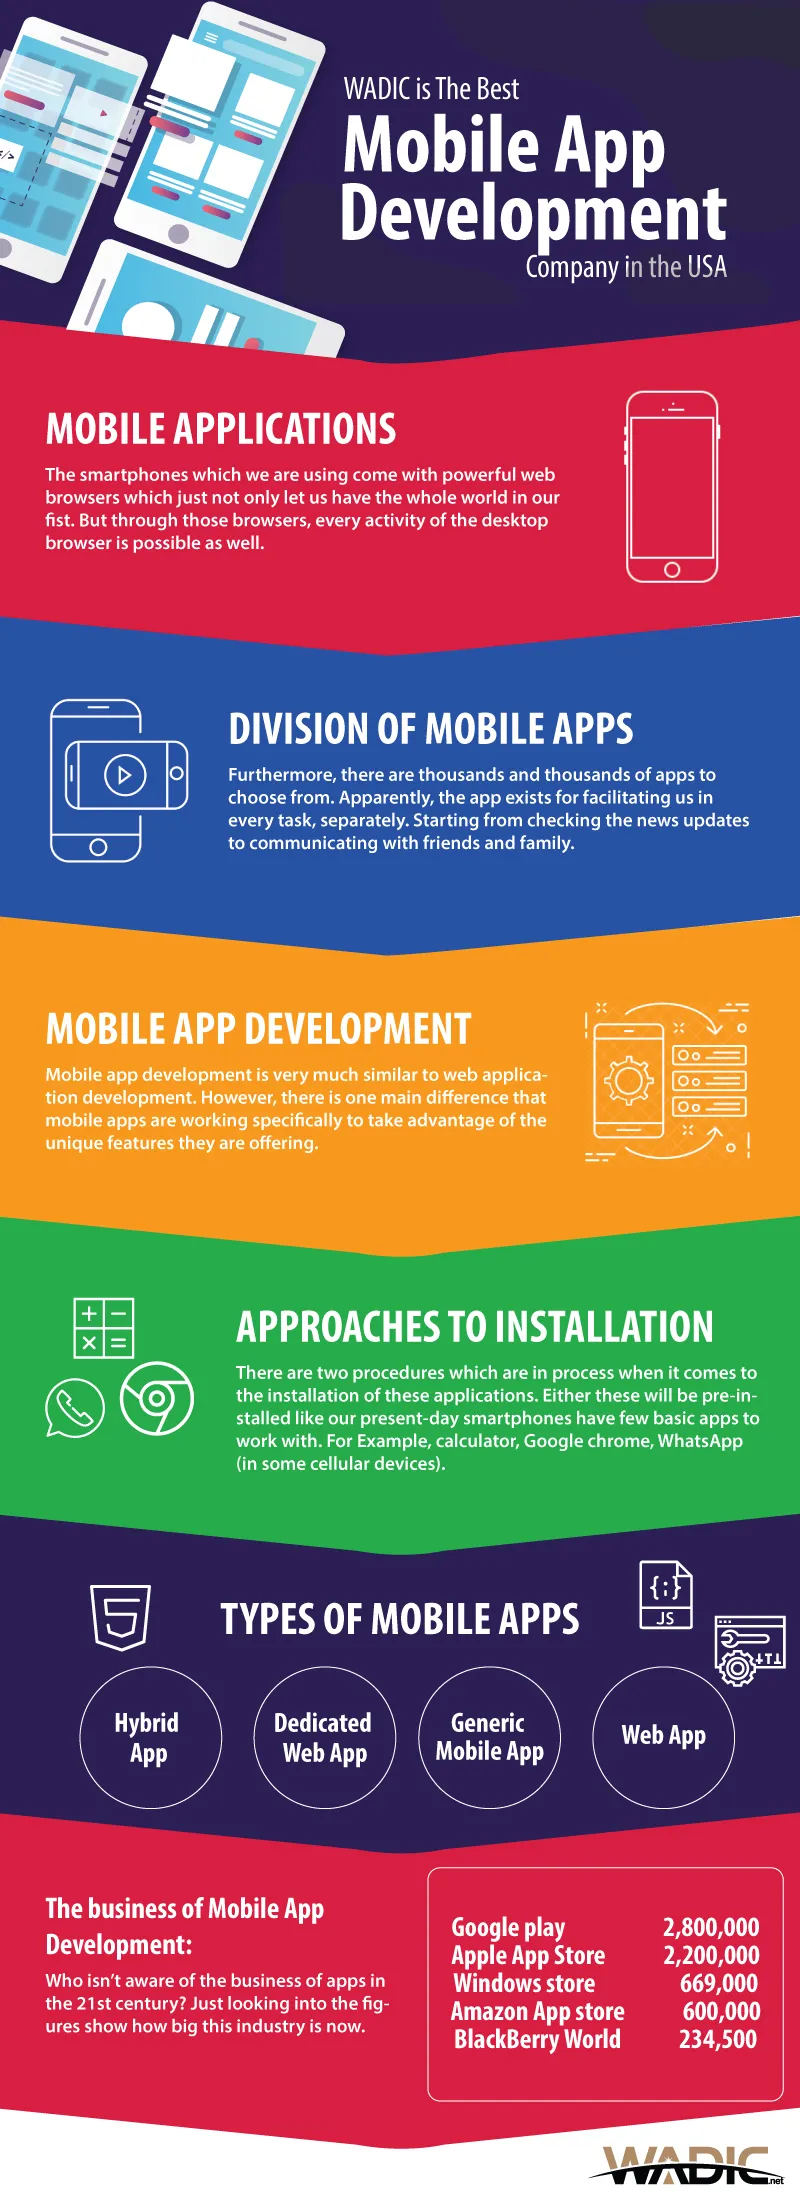 Wadic-Mobile App Development Company